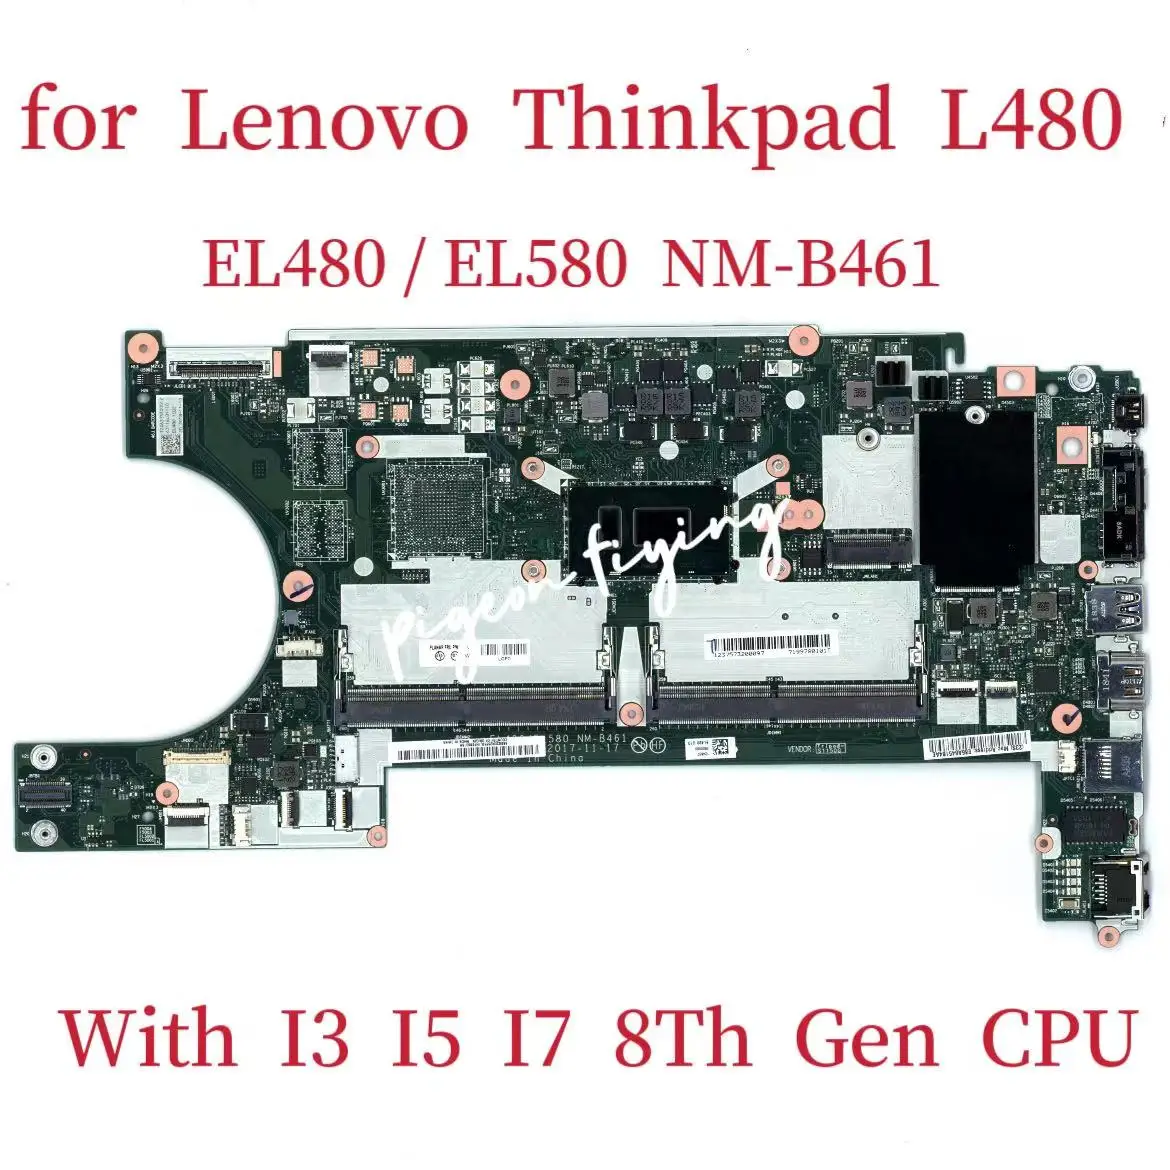 

EL480 EL580 NM-B461 Mainboard For Lenovo Thinkpad L480 L580 Laptop Motherboard With I3 I5 I7 8Th Gen CPU UMA FRU 02DC301 01LW344